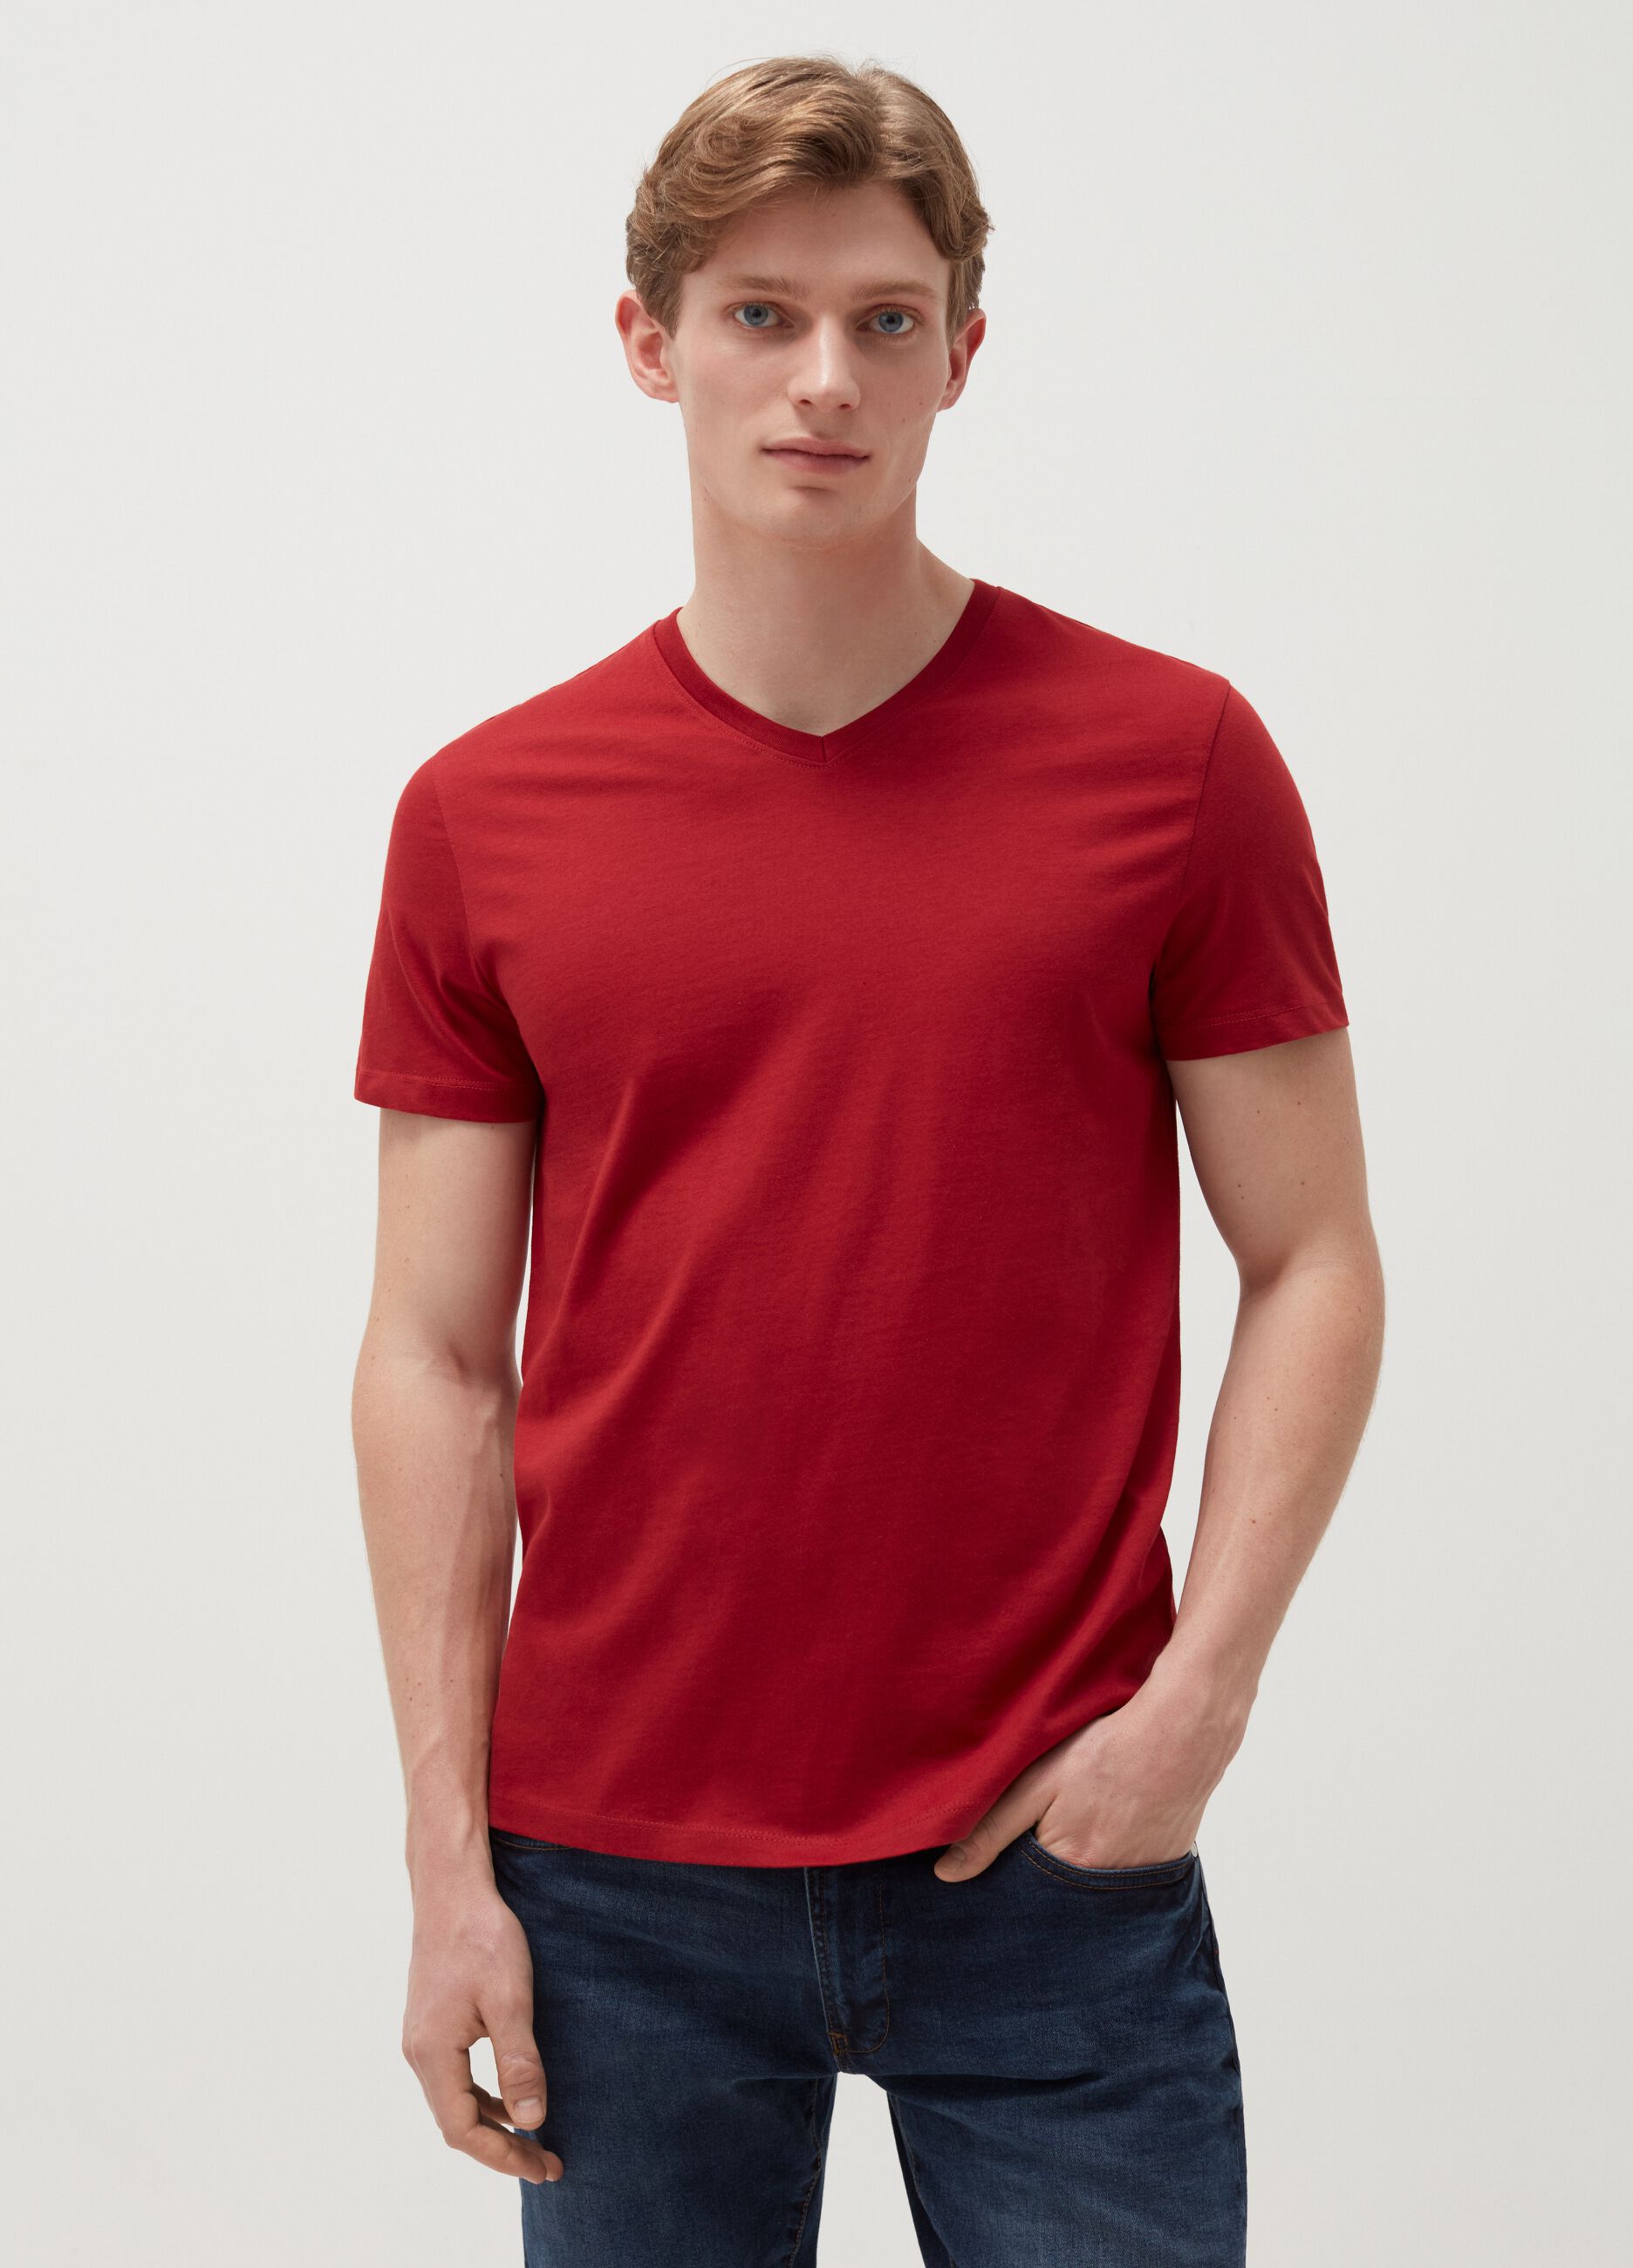 Cotton V-neck T-shirt